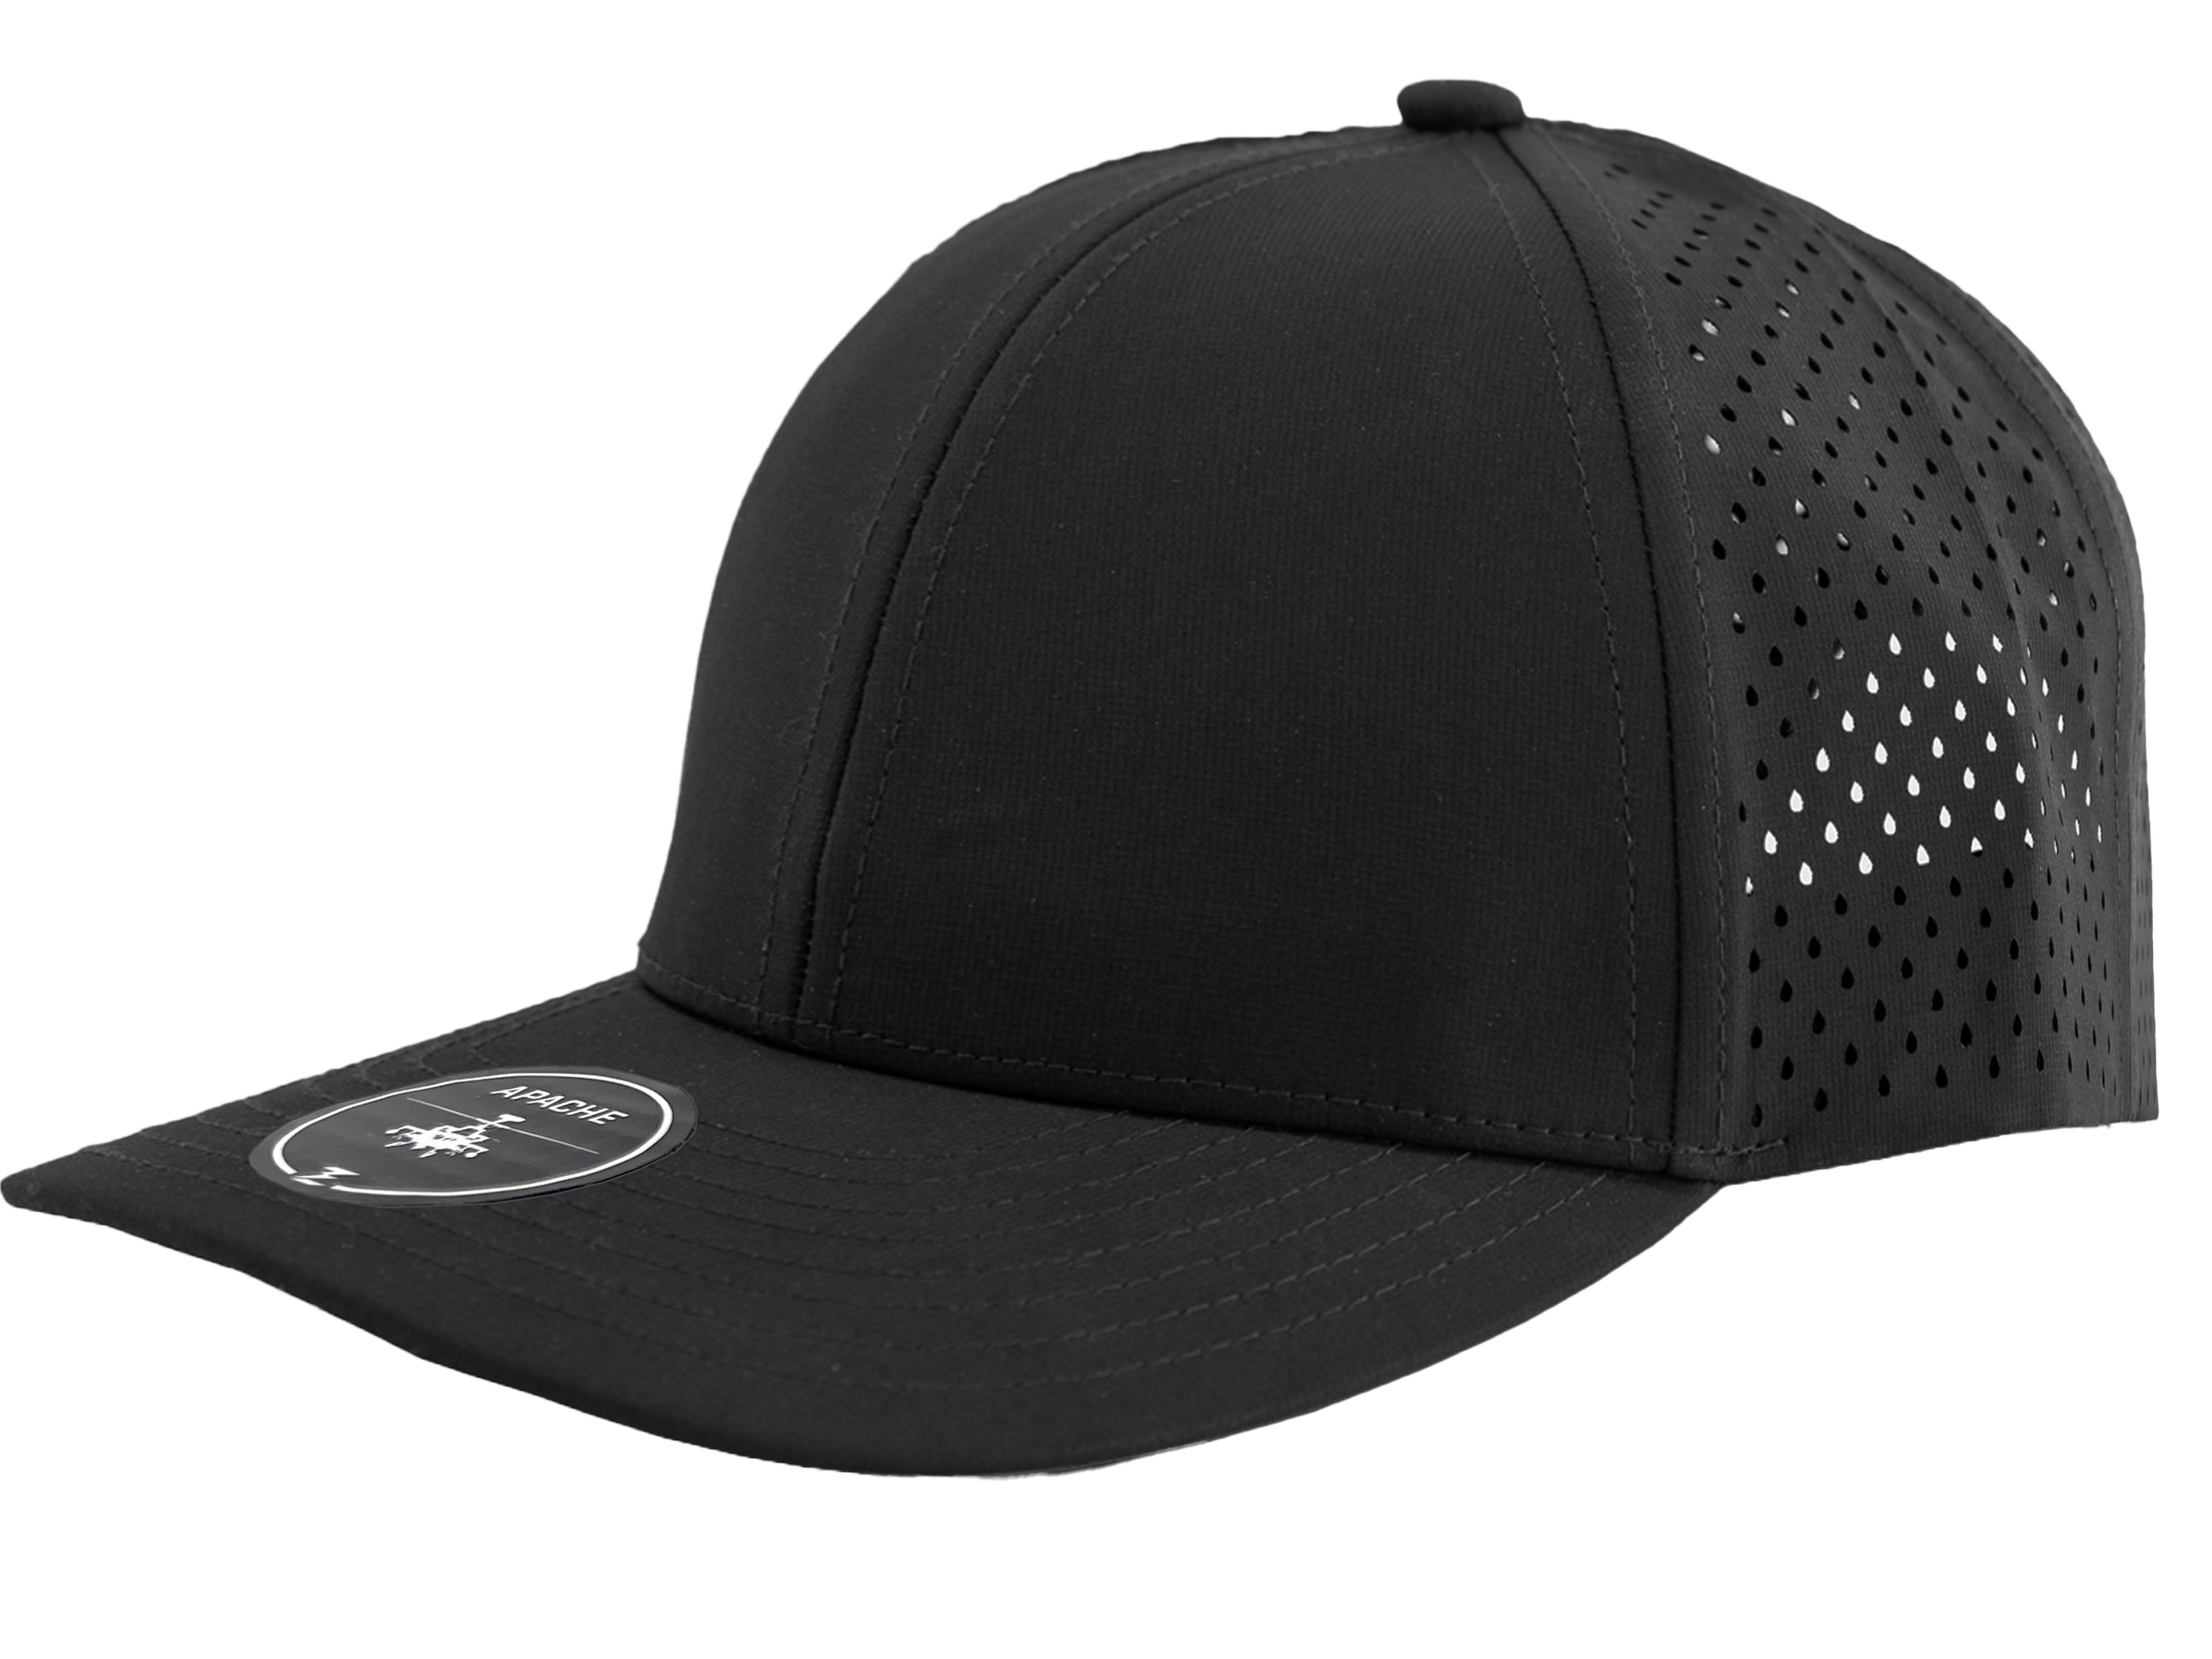 apache black Custom Hat side view snapback hat